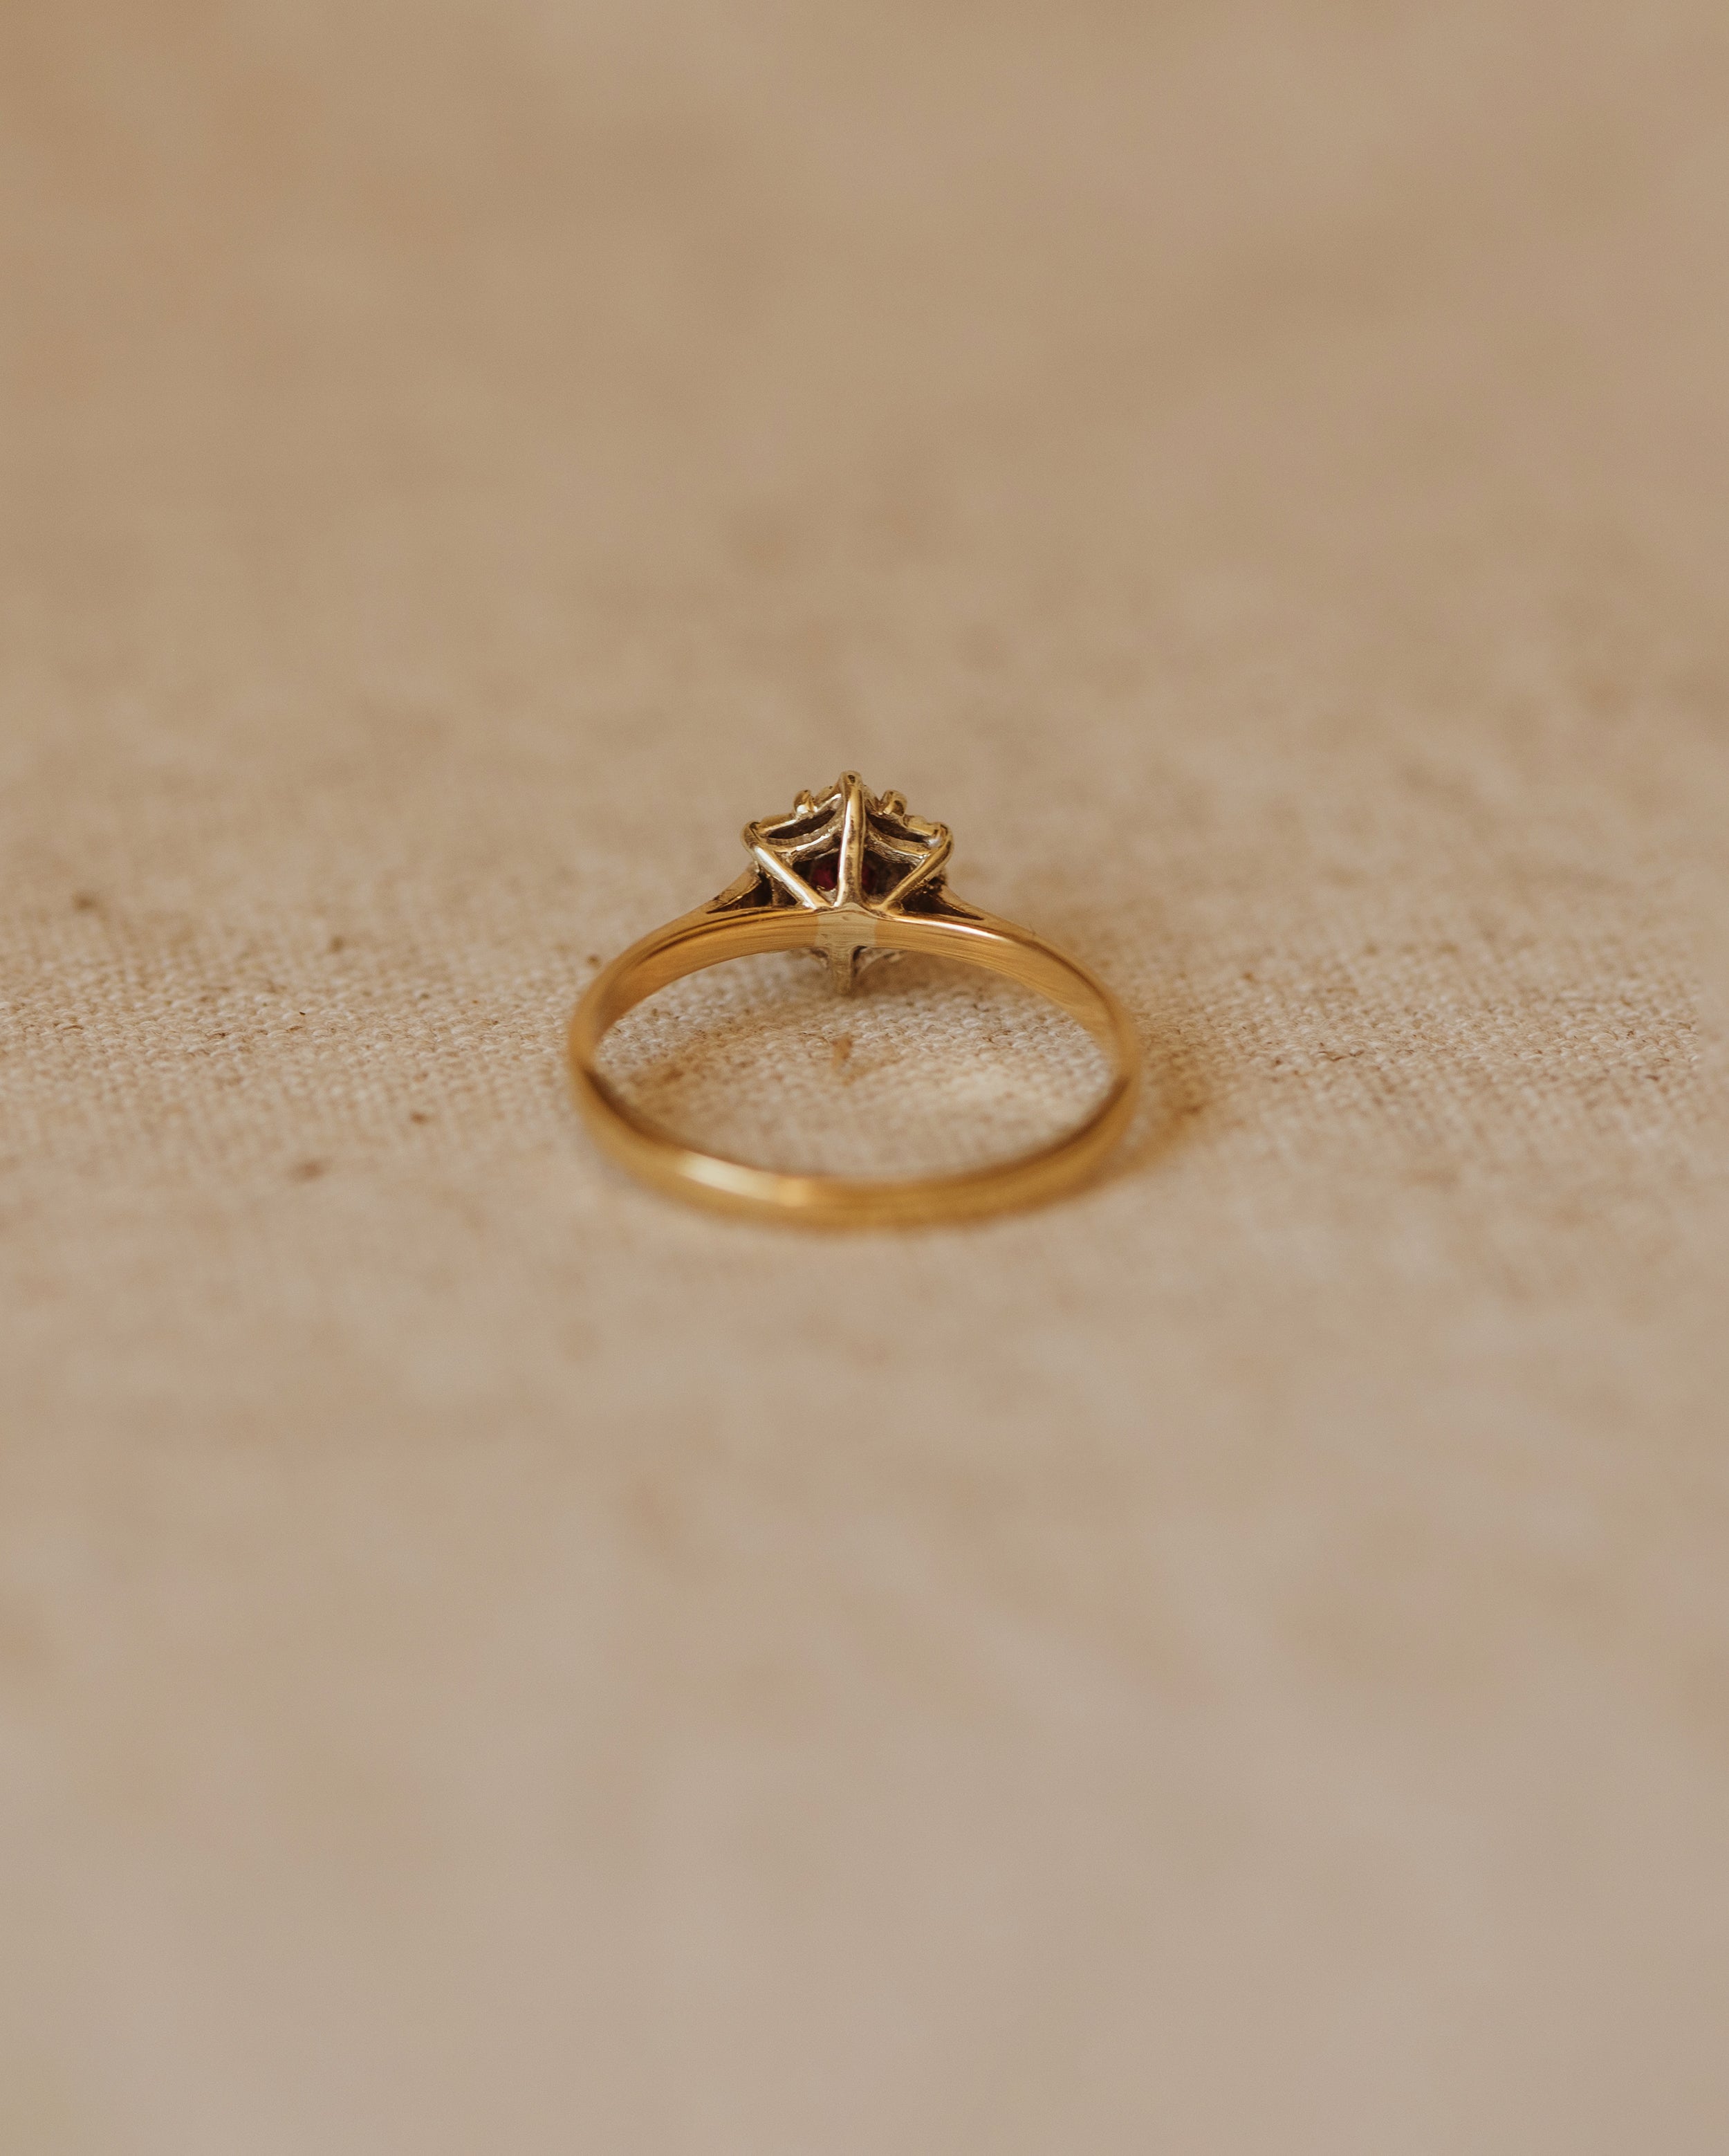 Bonnie Vintage 9ct Gold Amethyst & Diamond Ring